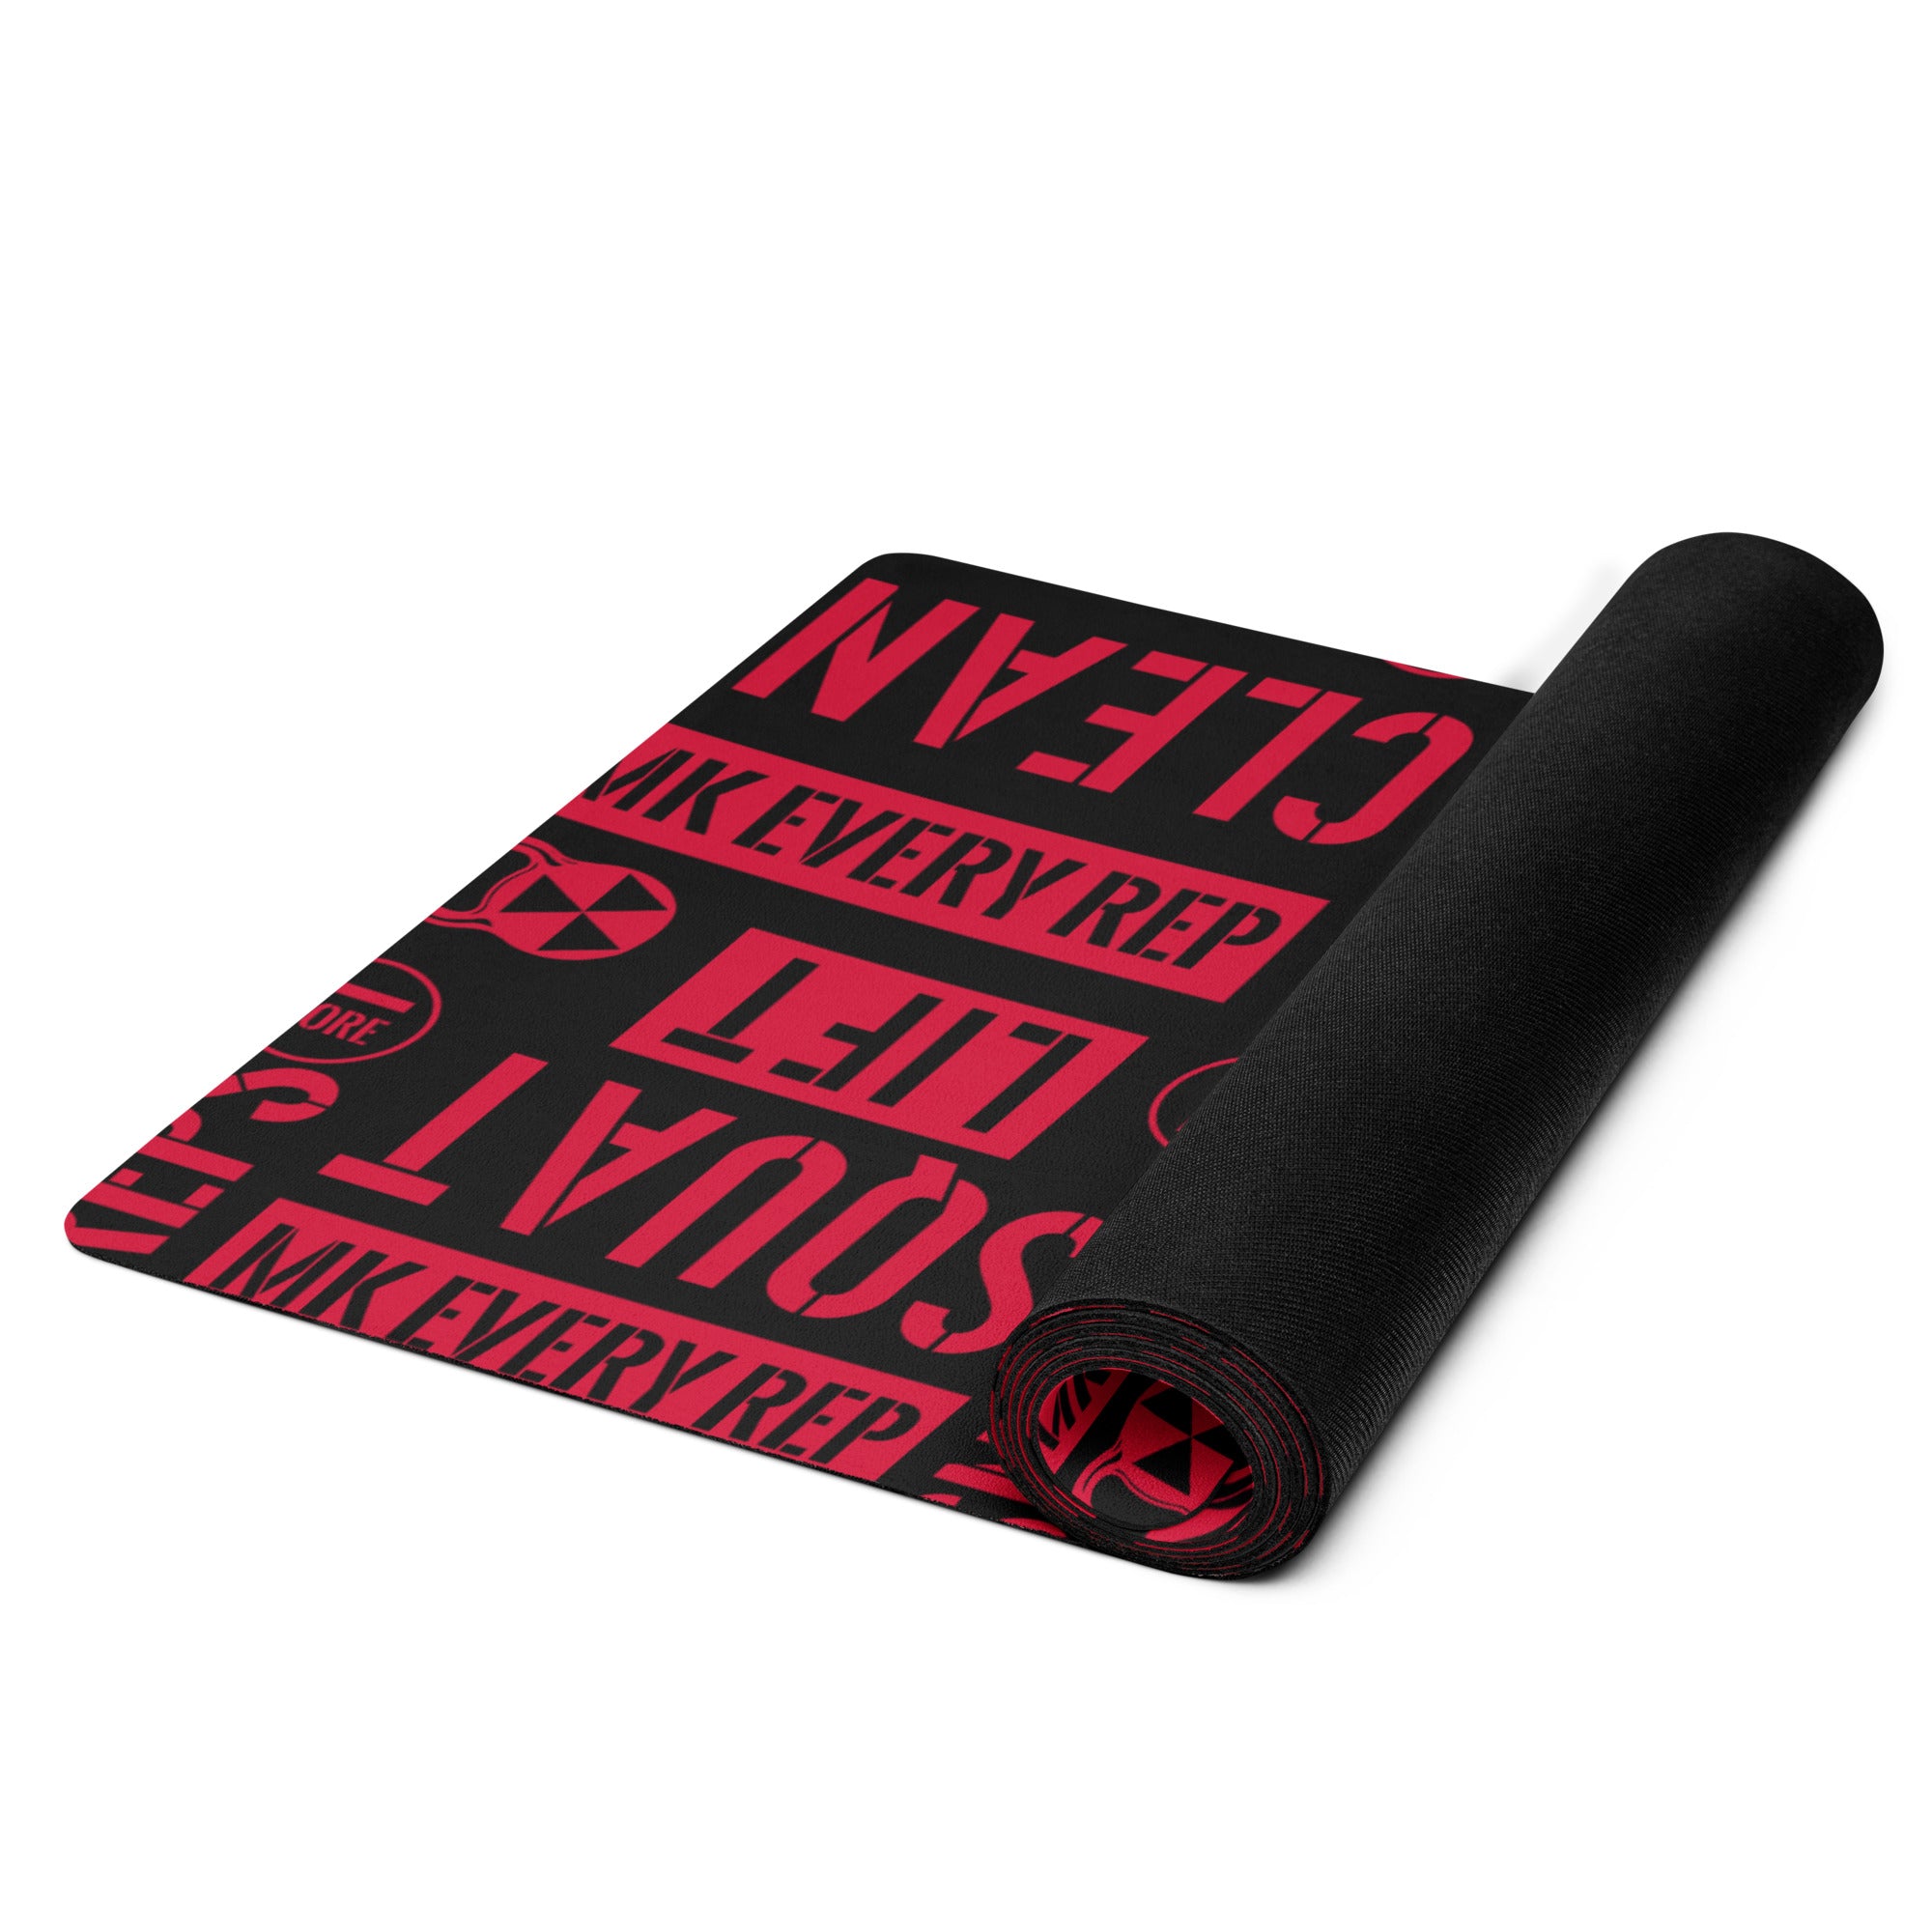 Black/Red Acronyms Yoga mat